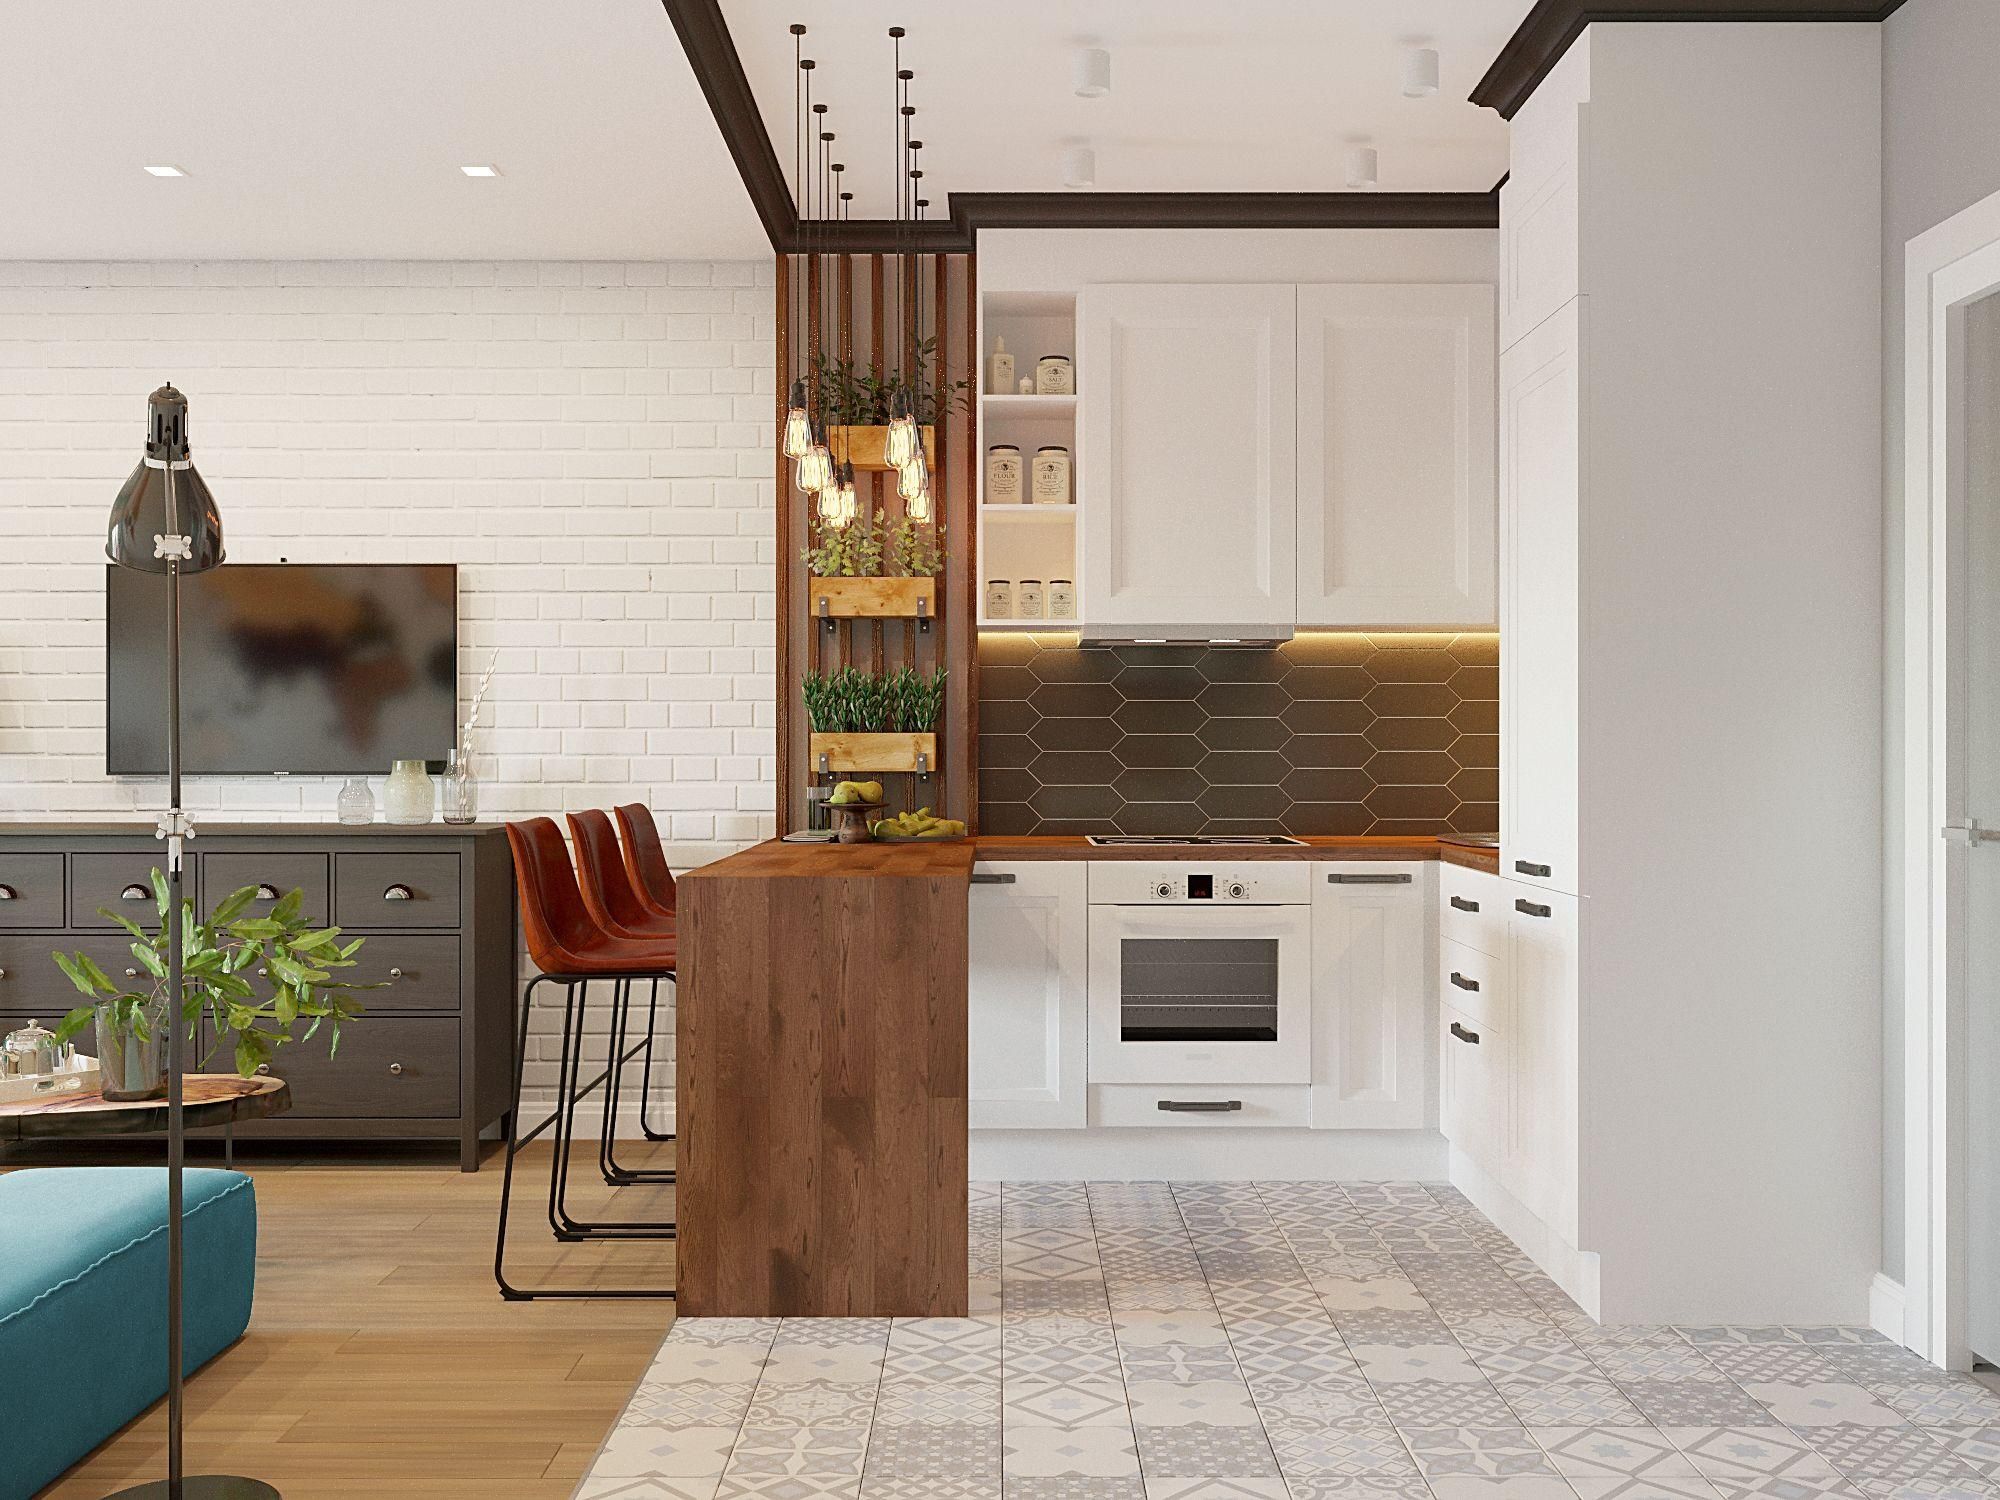 Барная стойка на кухне в квартире: нужна или нет - особенности и фото